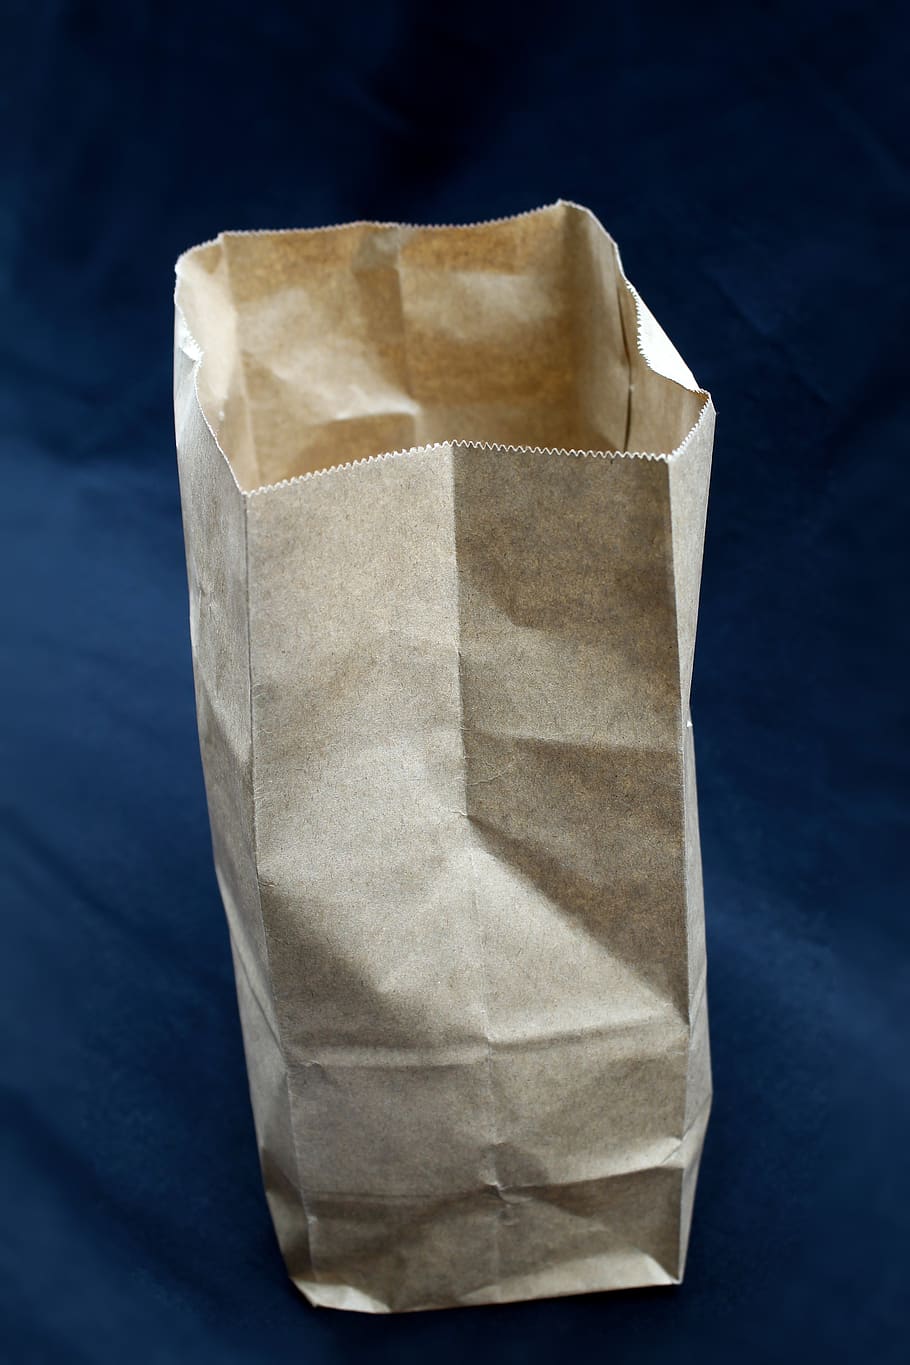 background, texture, design, paper bag, packaging, outdoor, paper, color, symbol, blue